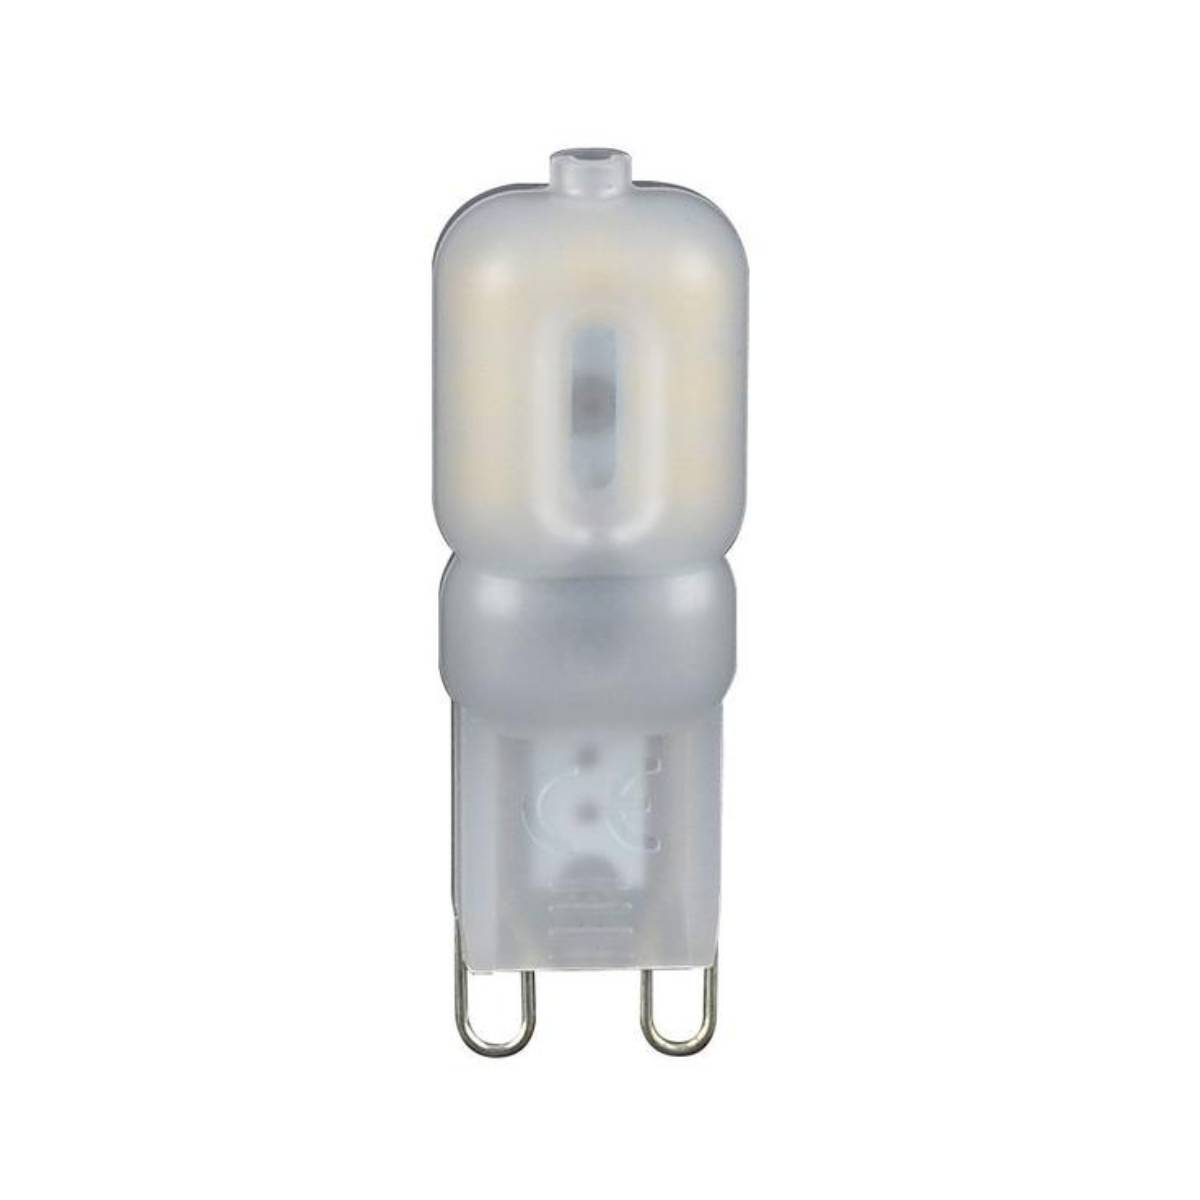 Forum Inlight INL-28573 G9 LED Capsule Light Bulb - Warm White (5616)